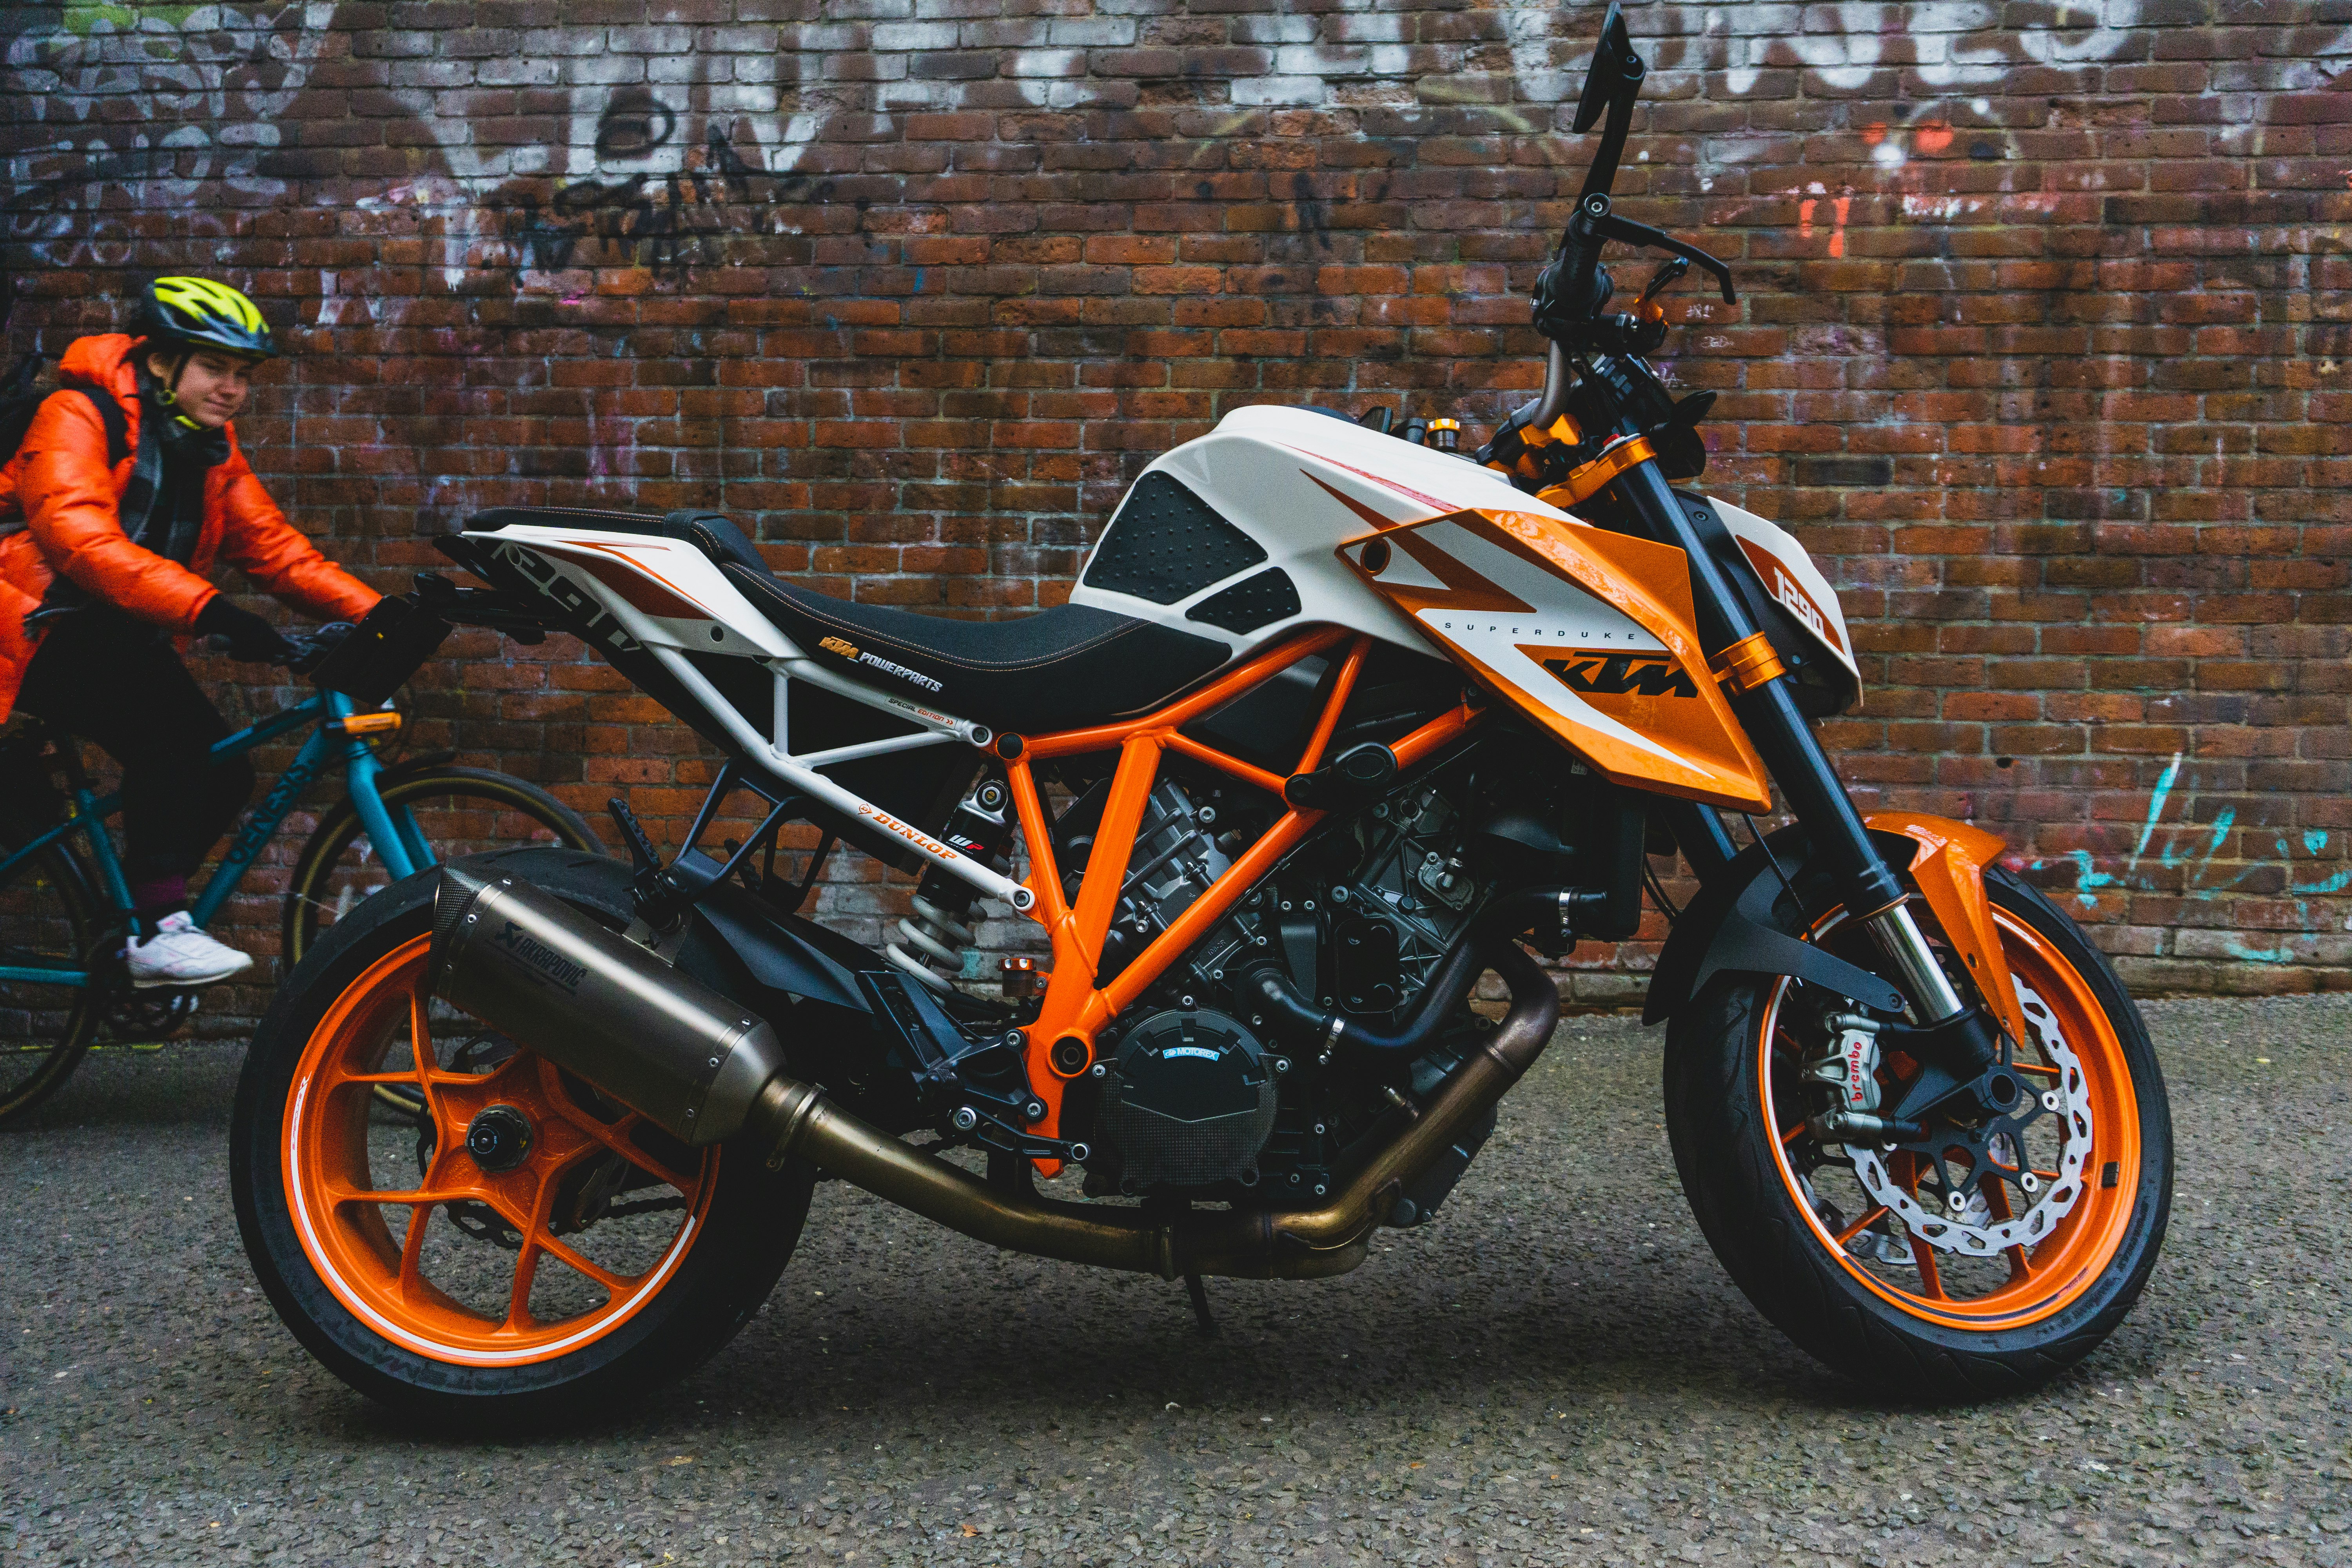 black and orange motorcycle parked beside brown brick wall